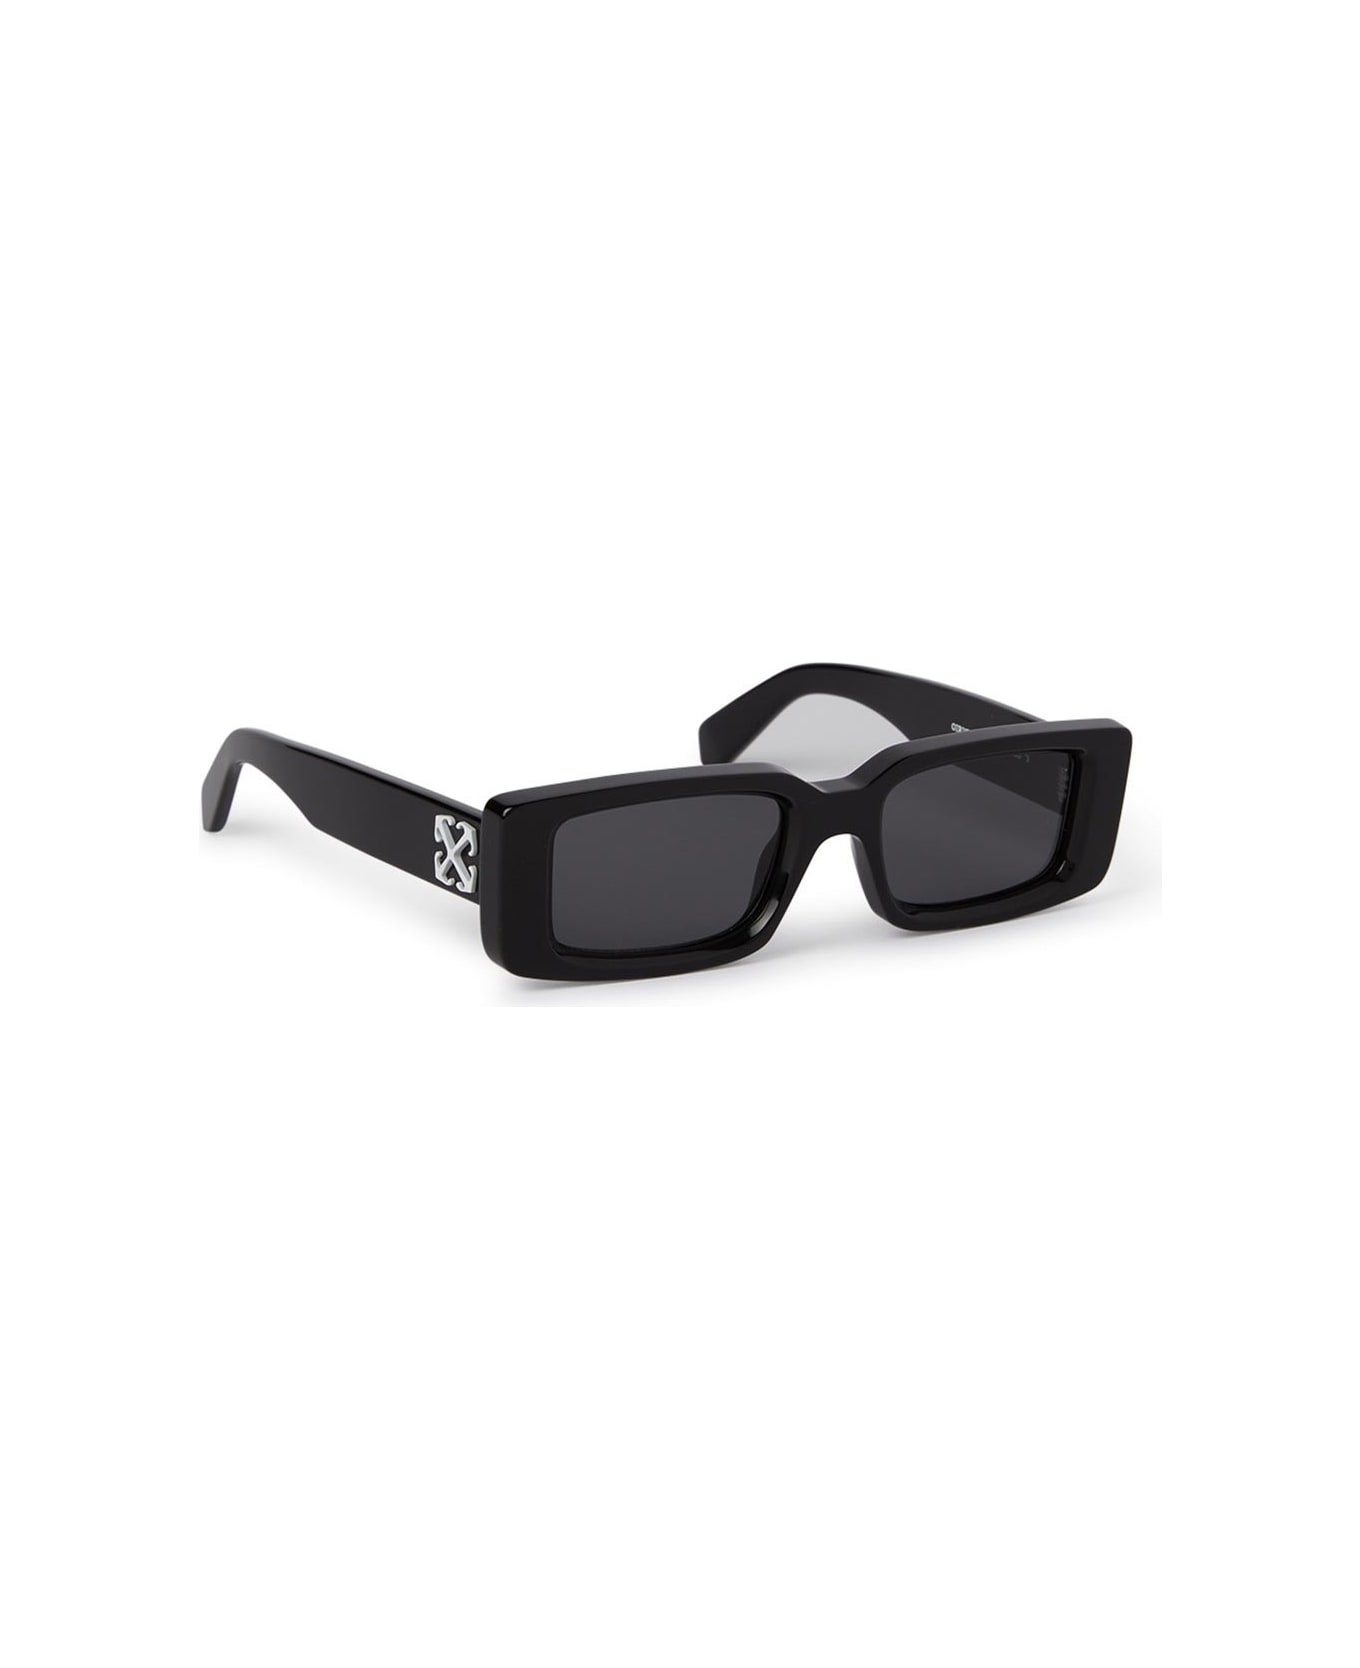 Off-White Sunglasses - Nero/Nero サングラス